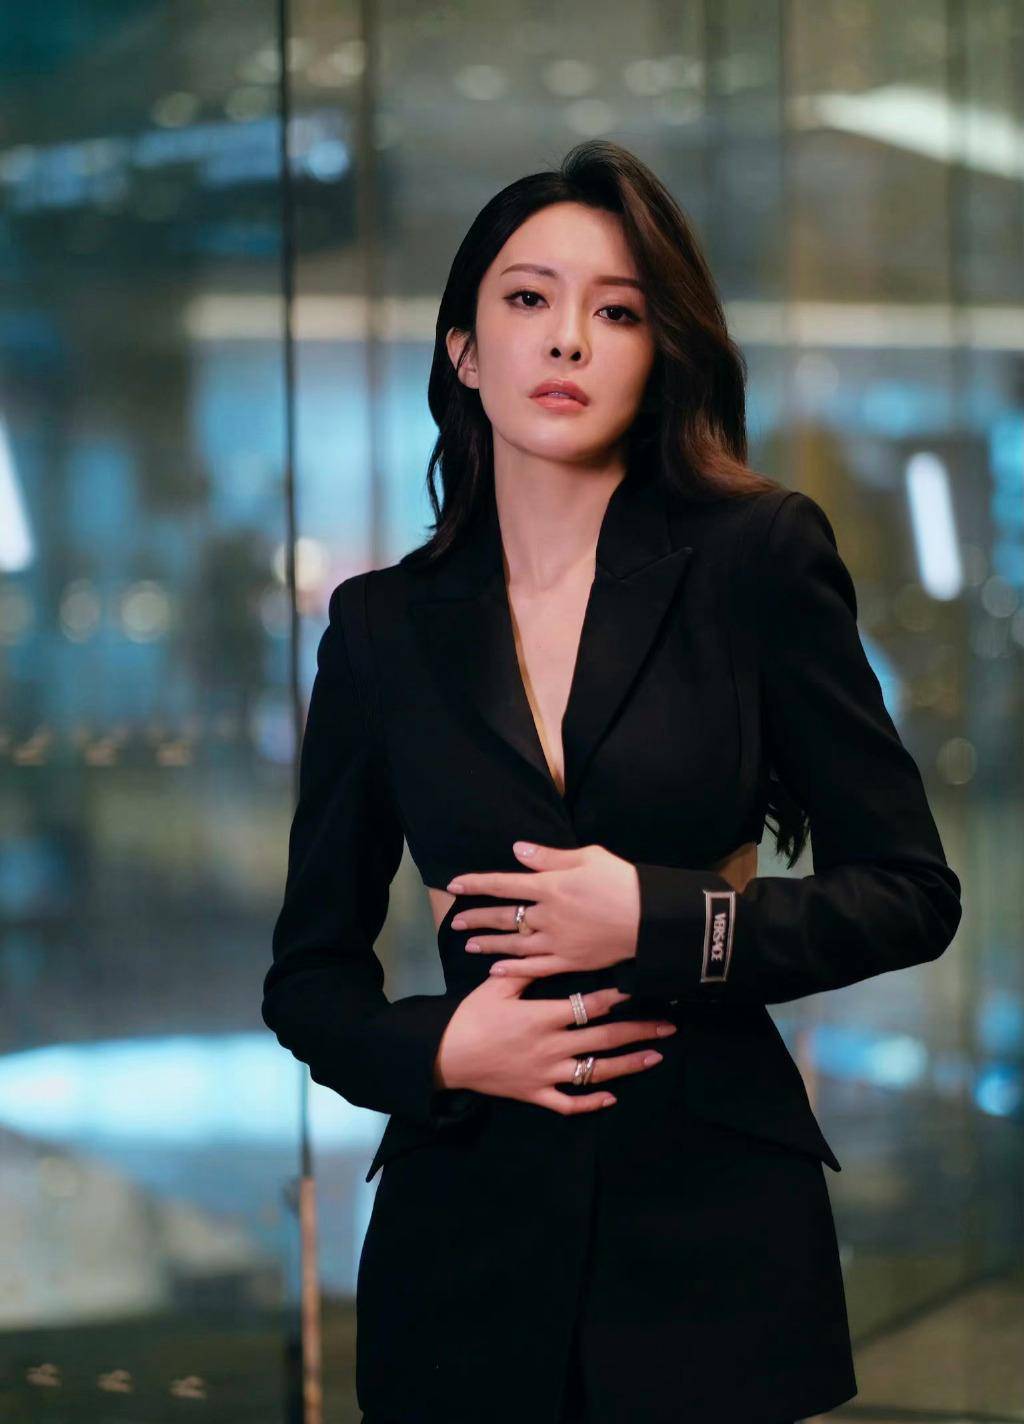 tvb女演员张曦雯身着黑色西装短裙出席活动,知性,大方,迷人,养眼